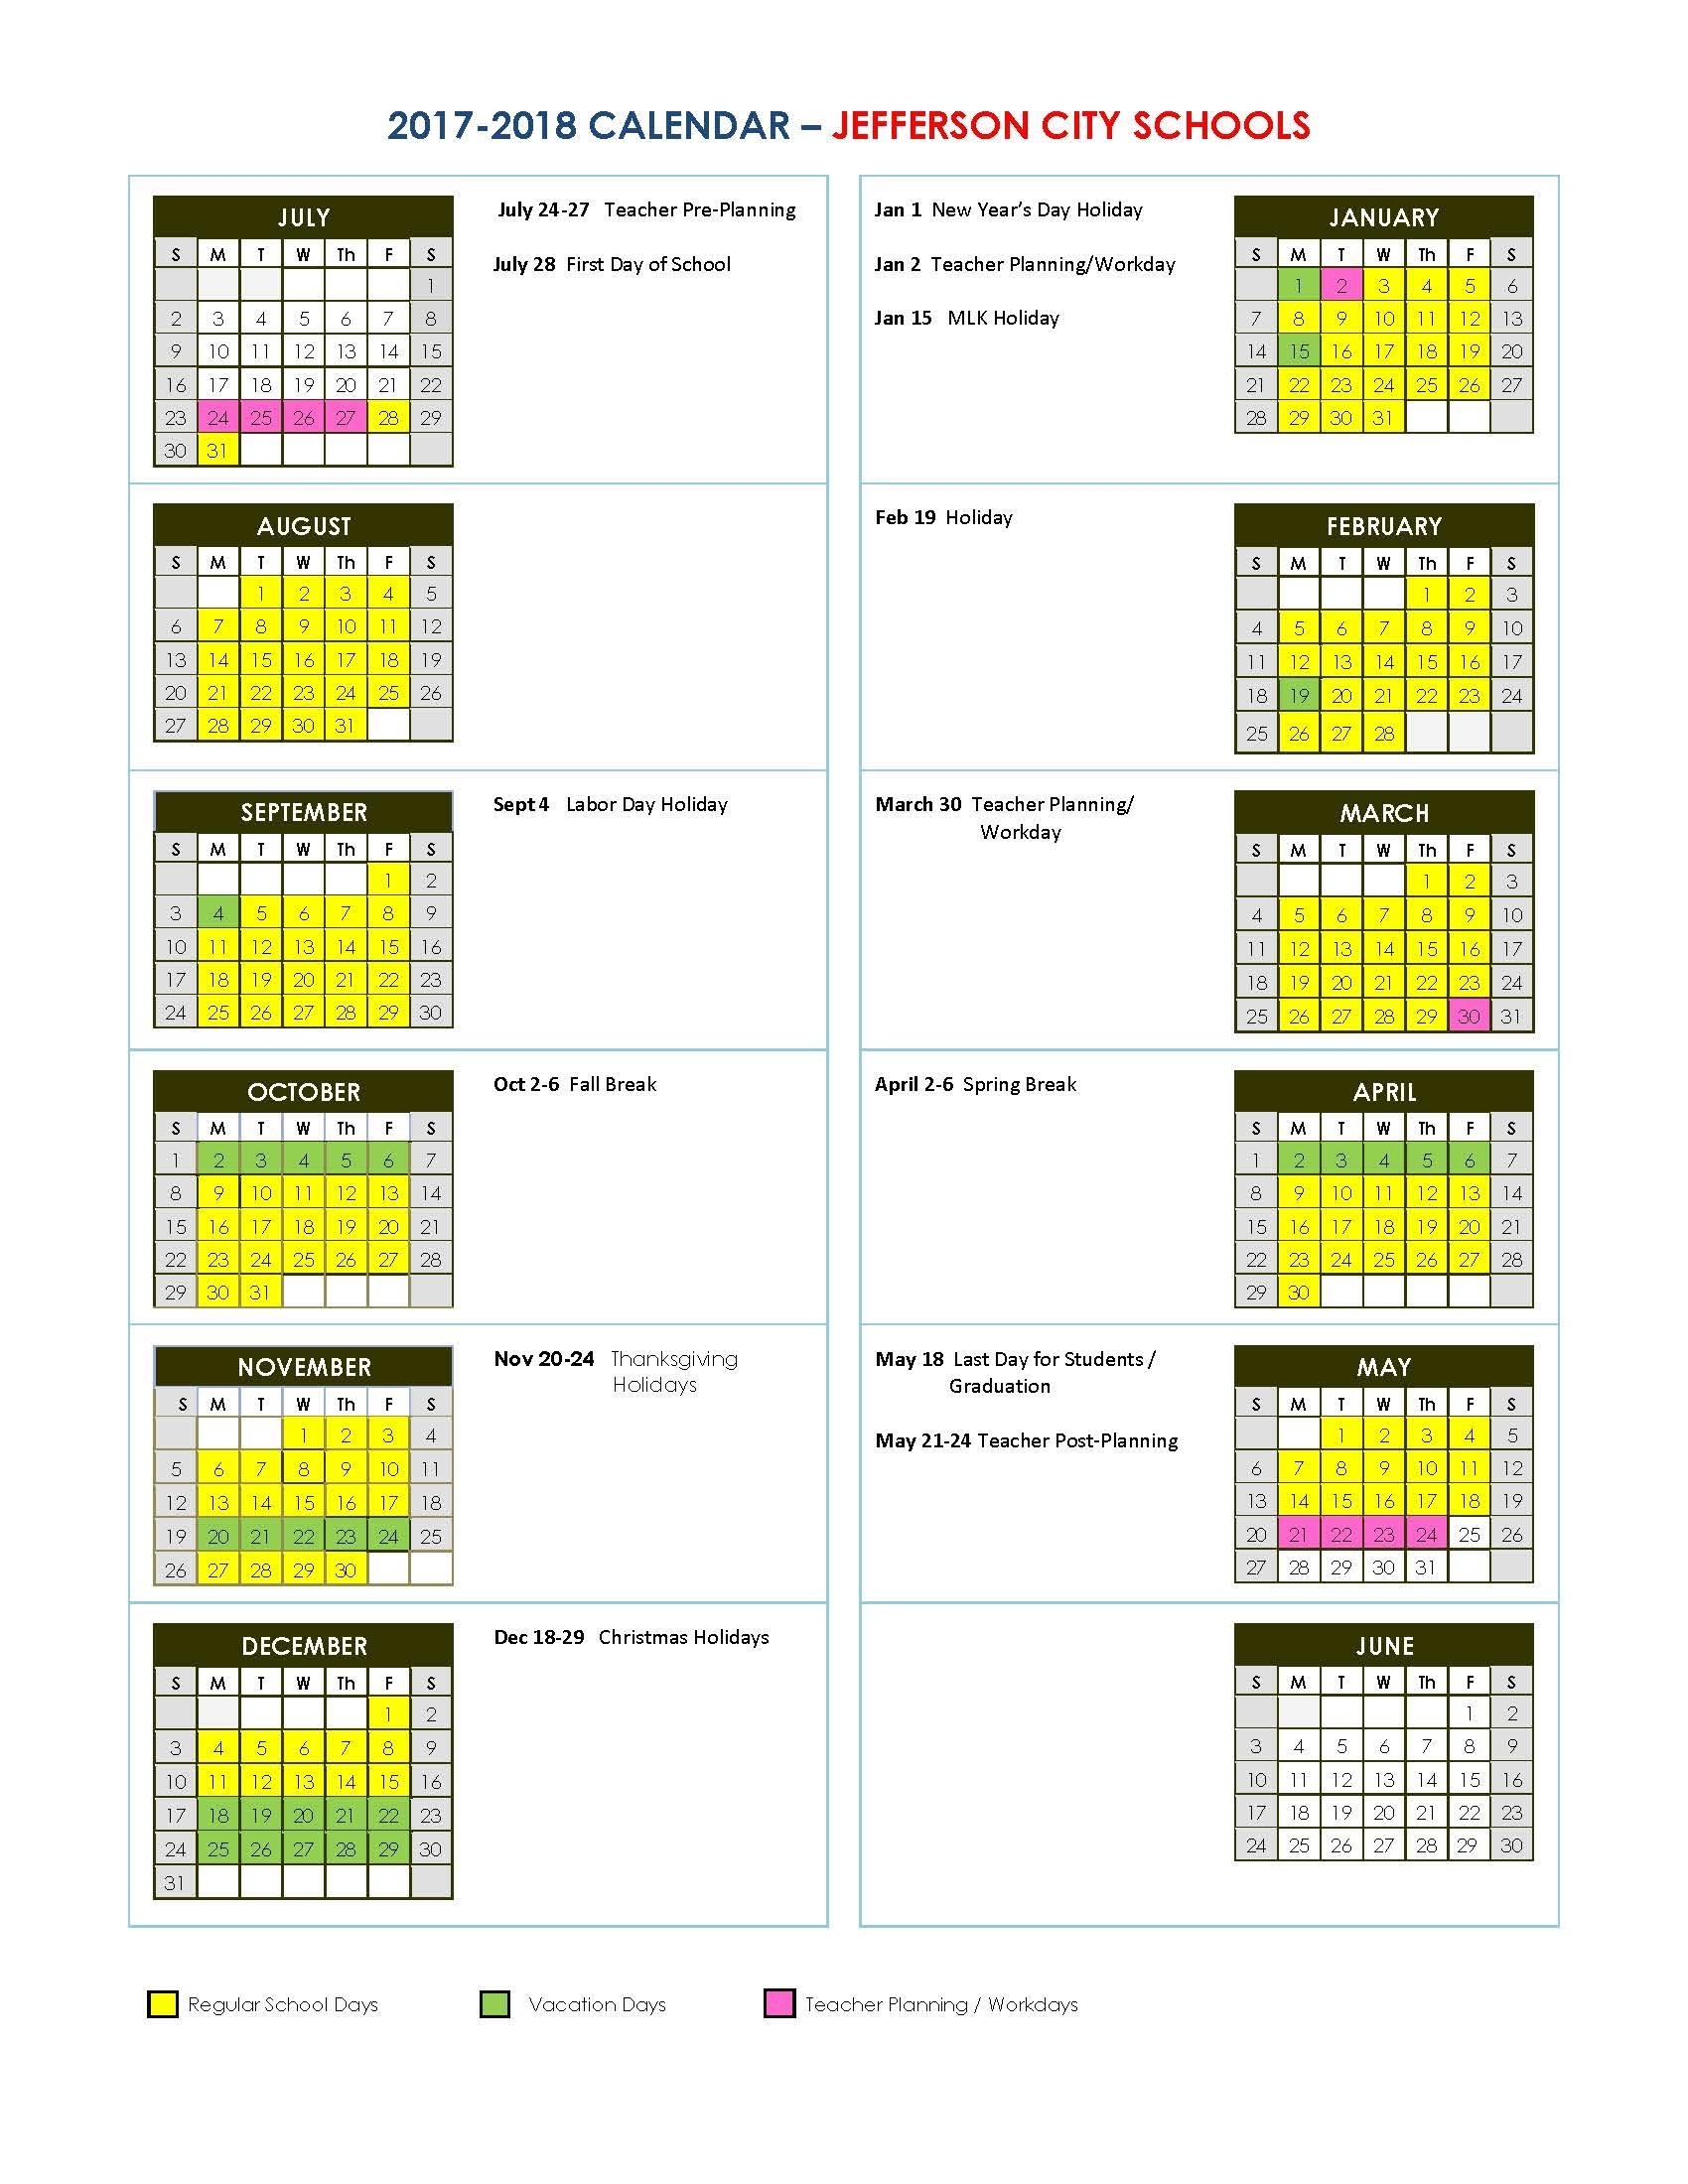 Jefferson City Schools | with regard to Uga School Calendar 2019-2020